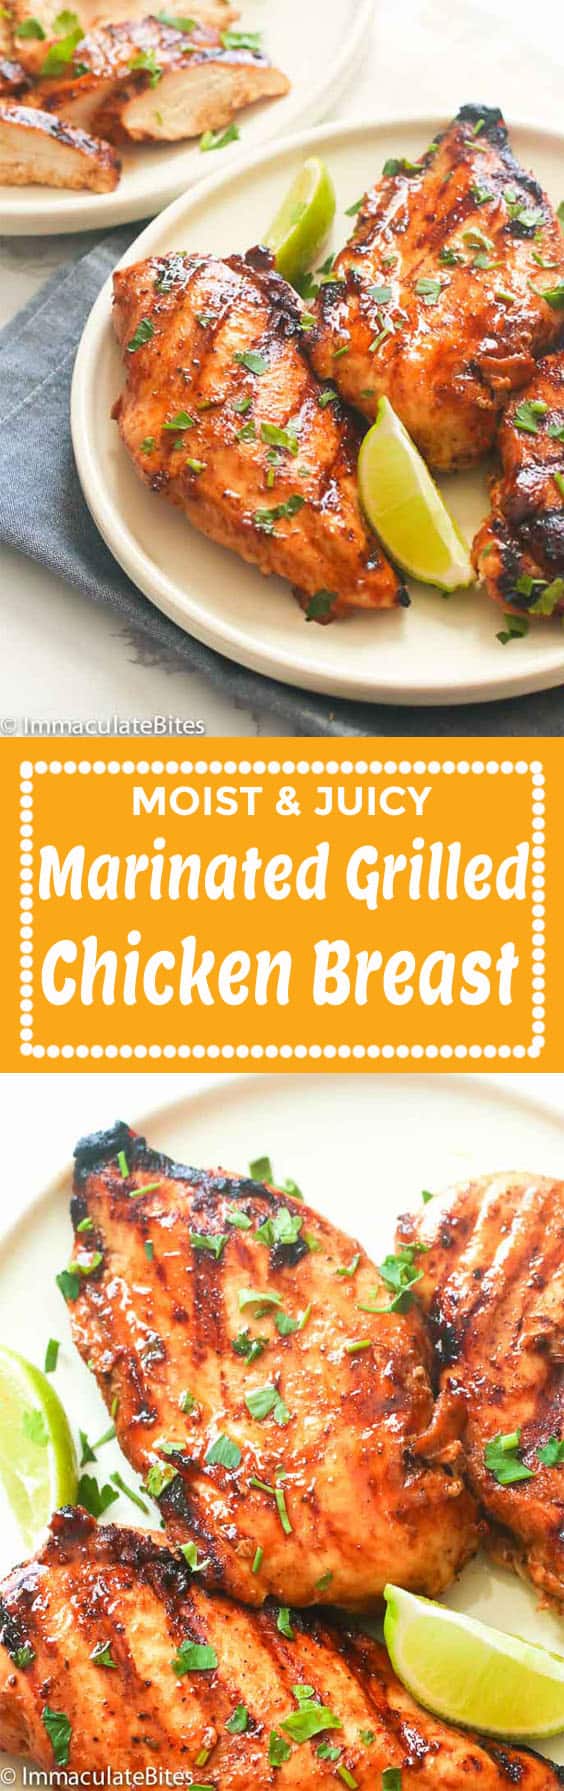 Marinated Grilled Chicken Breast